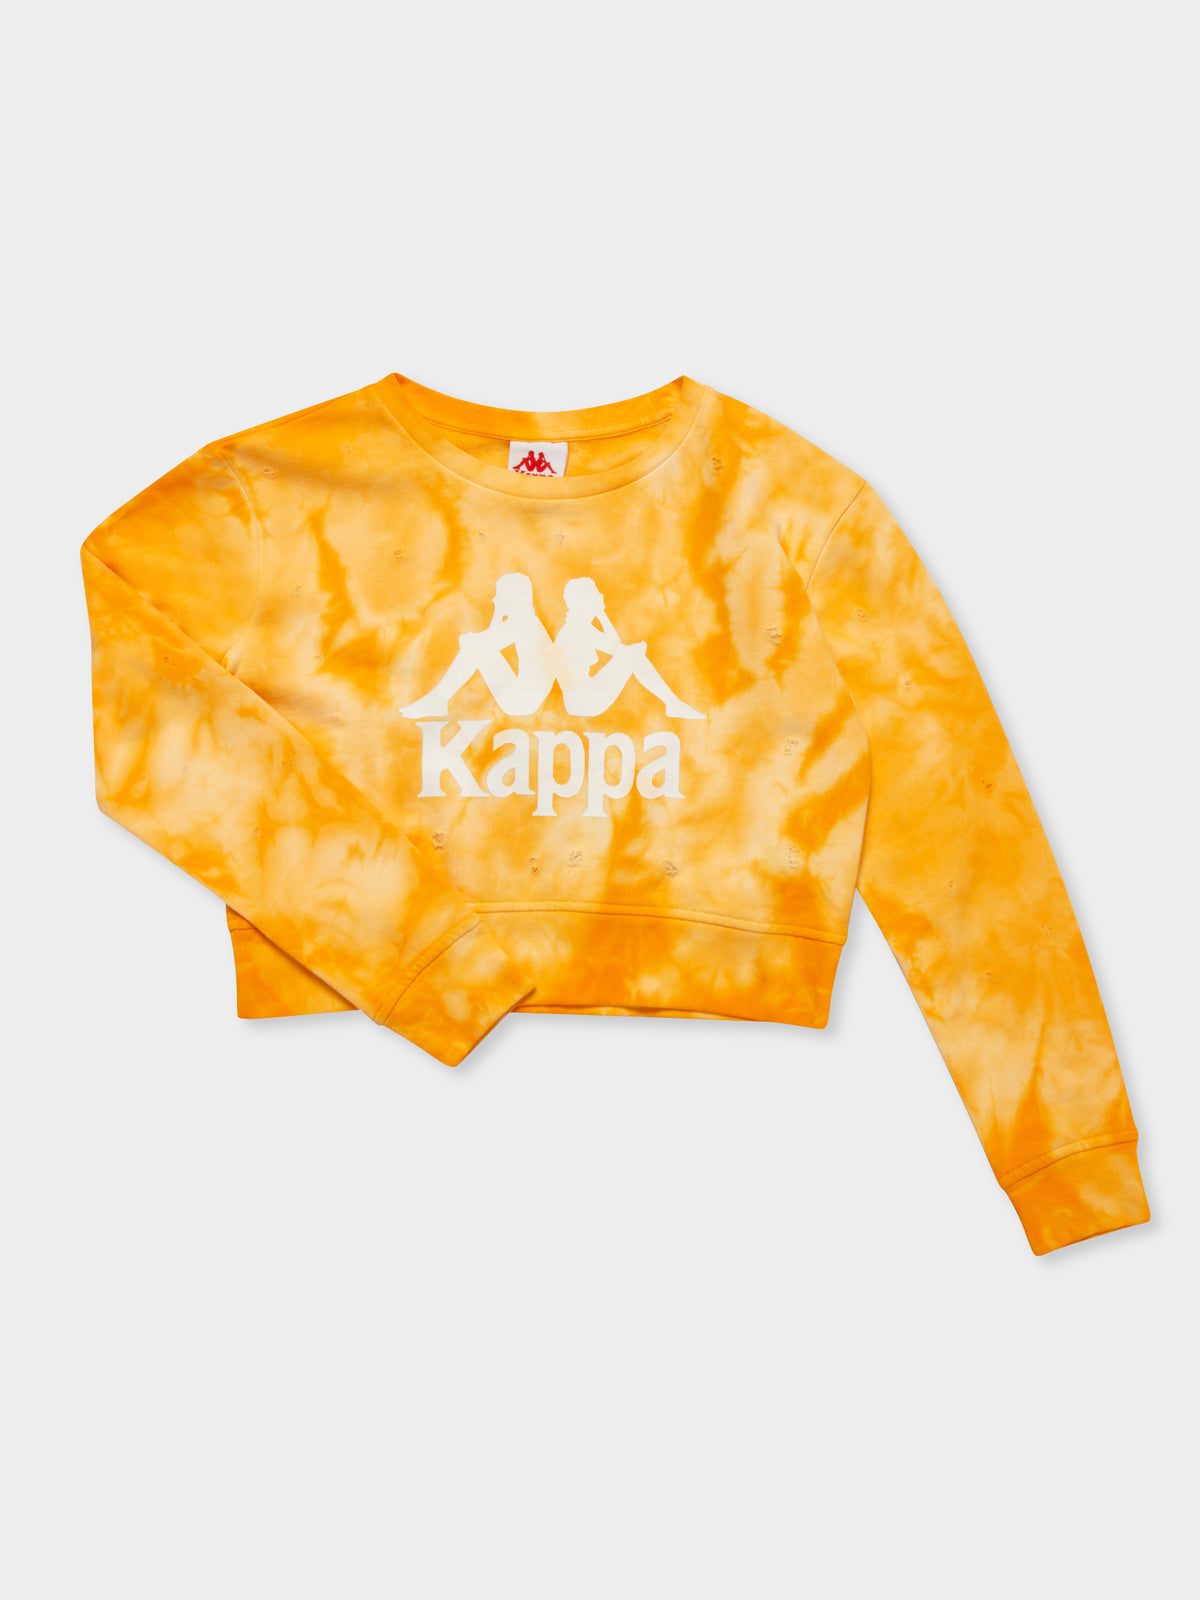 Authentic Cavosa Sweatshirt in Orange Tie Dye